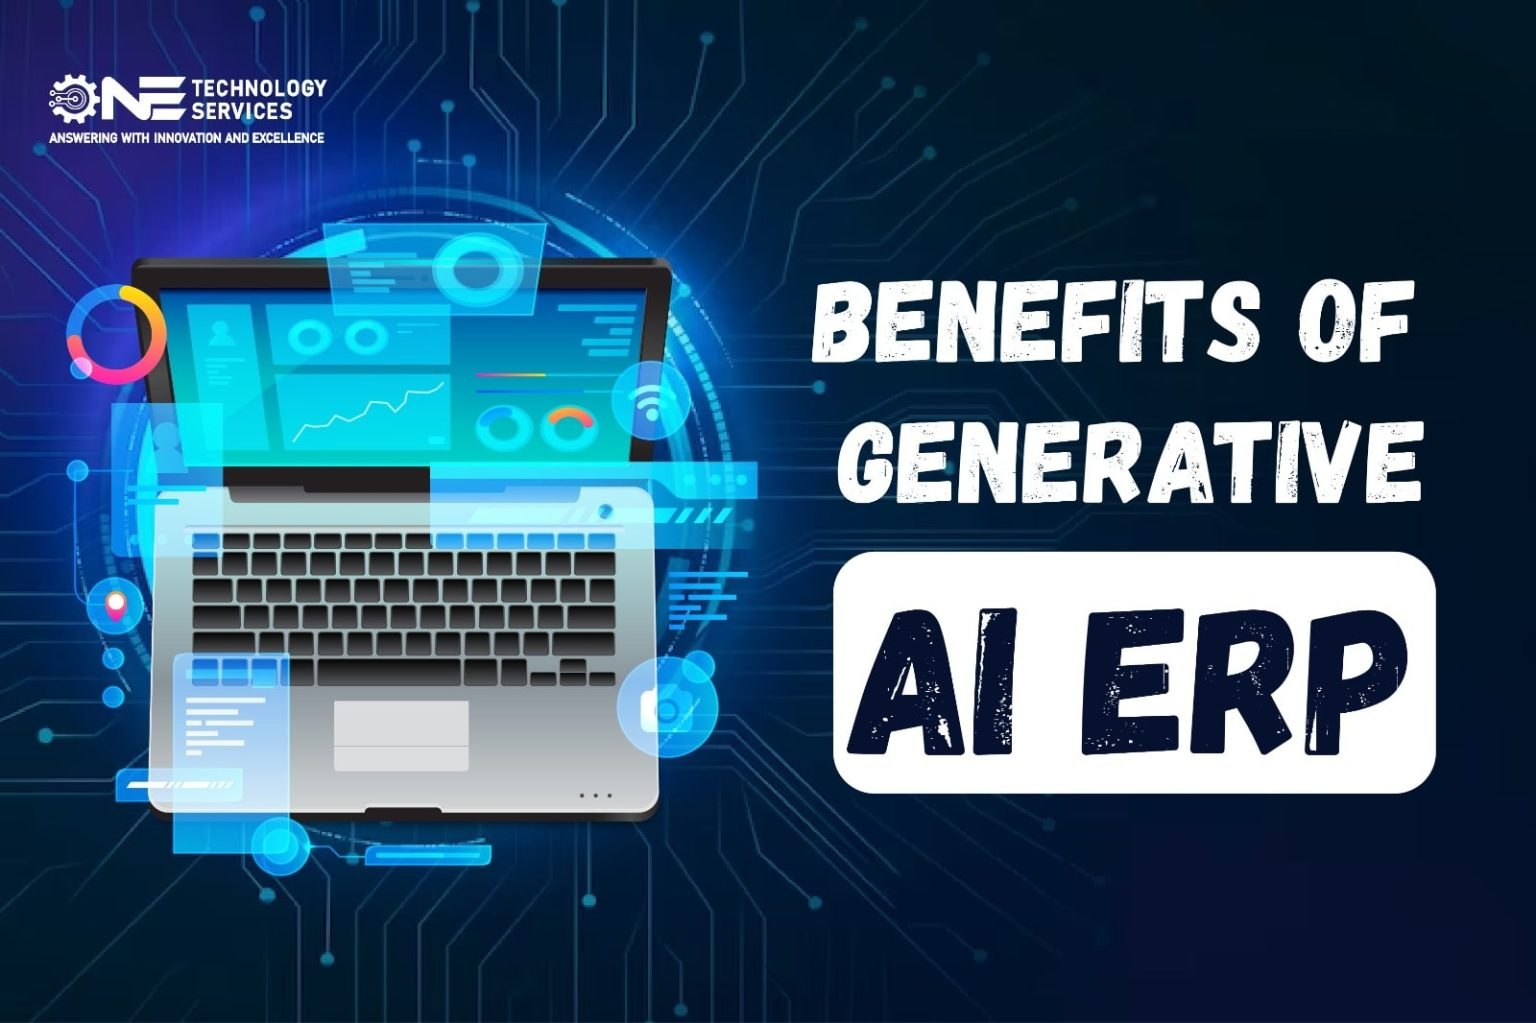 Benefits of Generative AI ERP